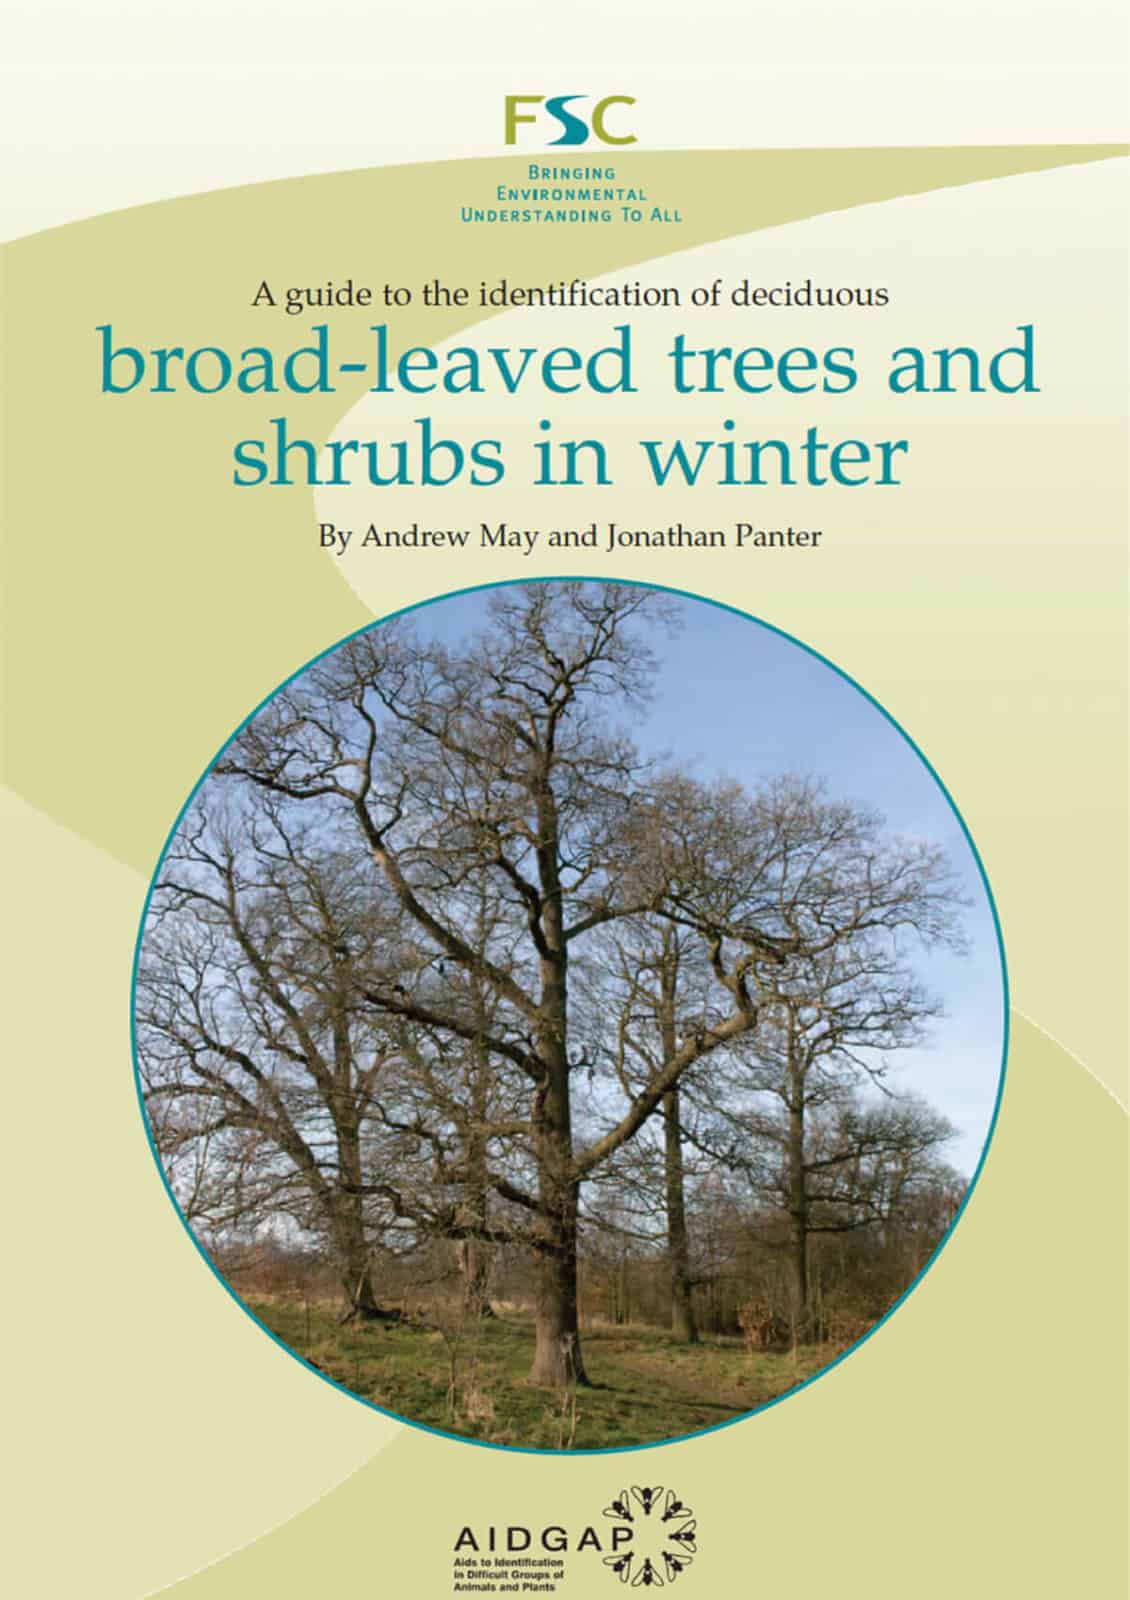 trees in winter aidgap